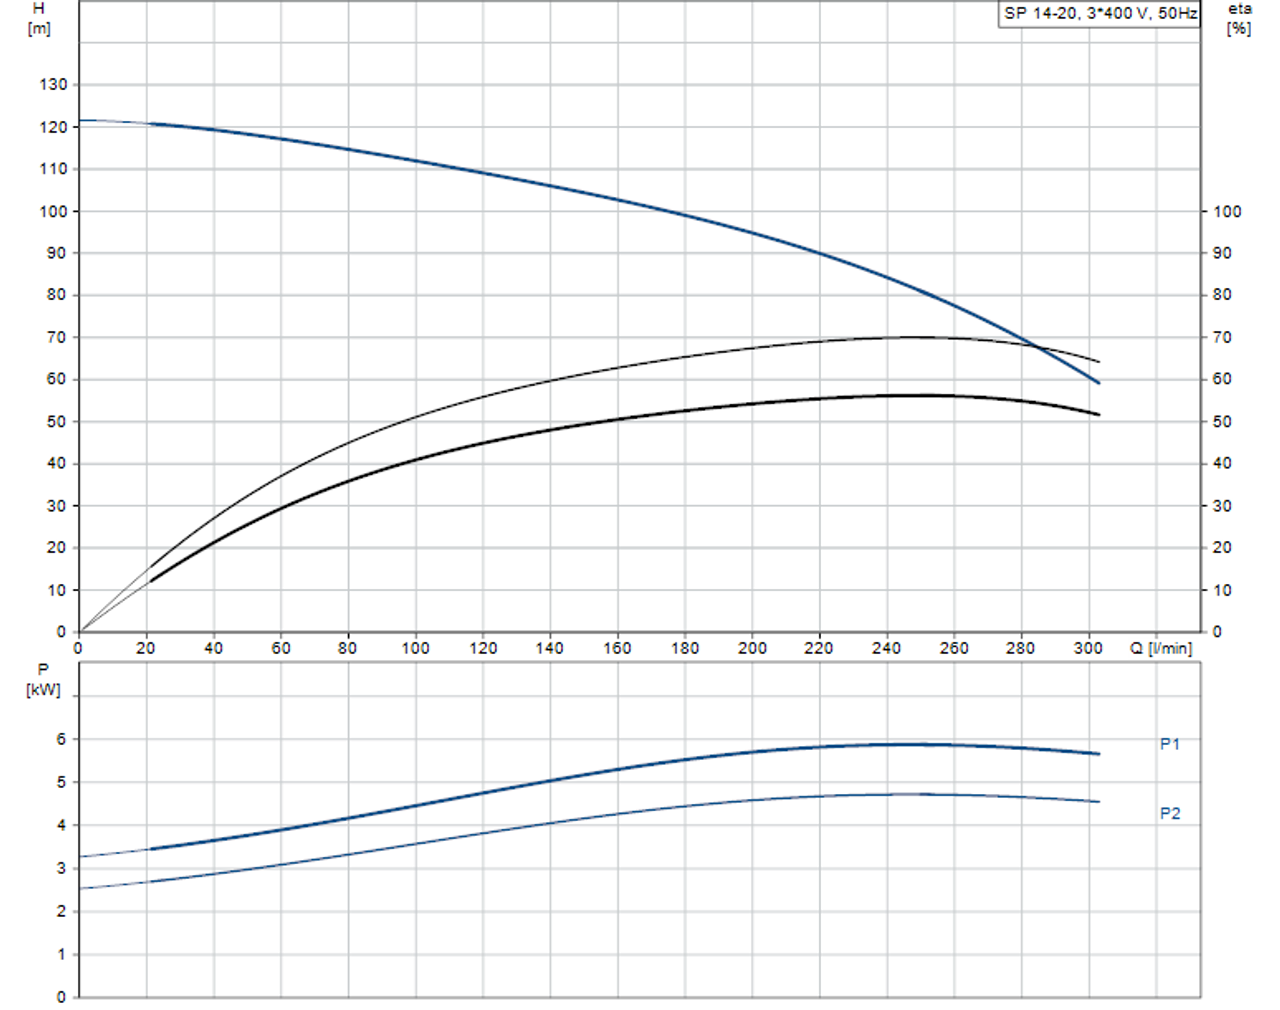 SP 14-20 415v Performance Curve